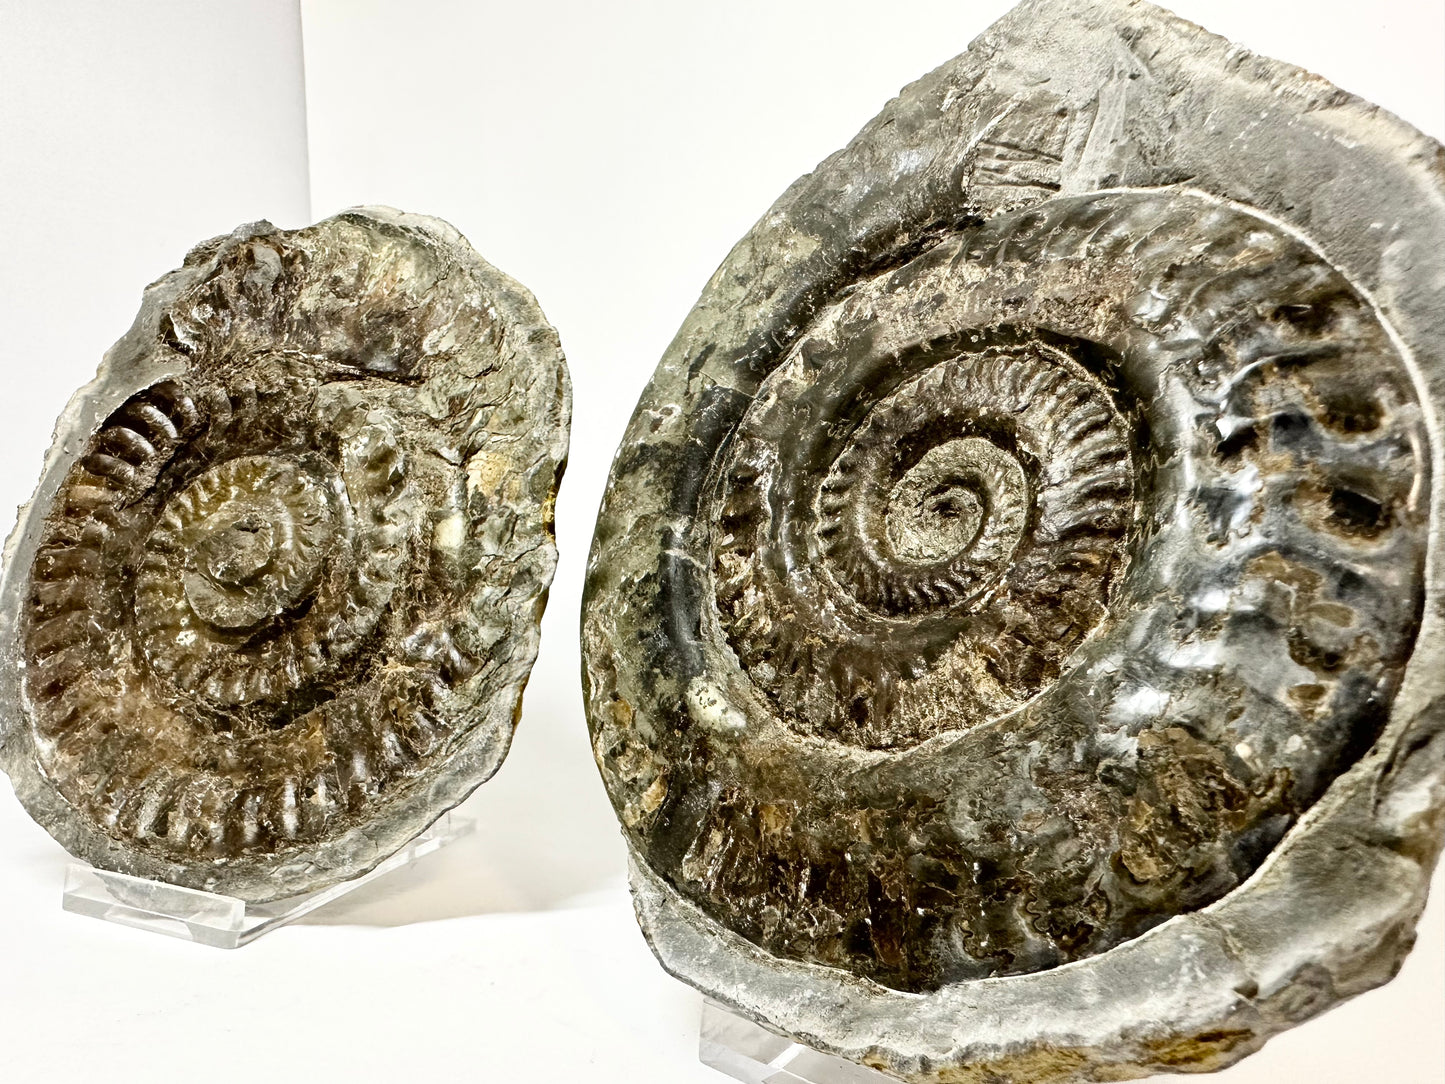 Hildoceras Lustanicum Ammonite pos/neg. Jurassic coast, North Yorkshire, Whitby.